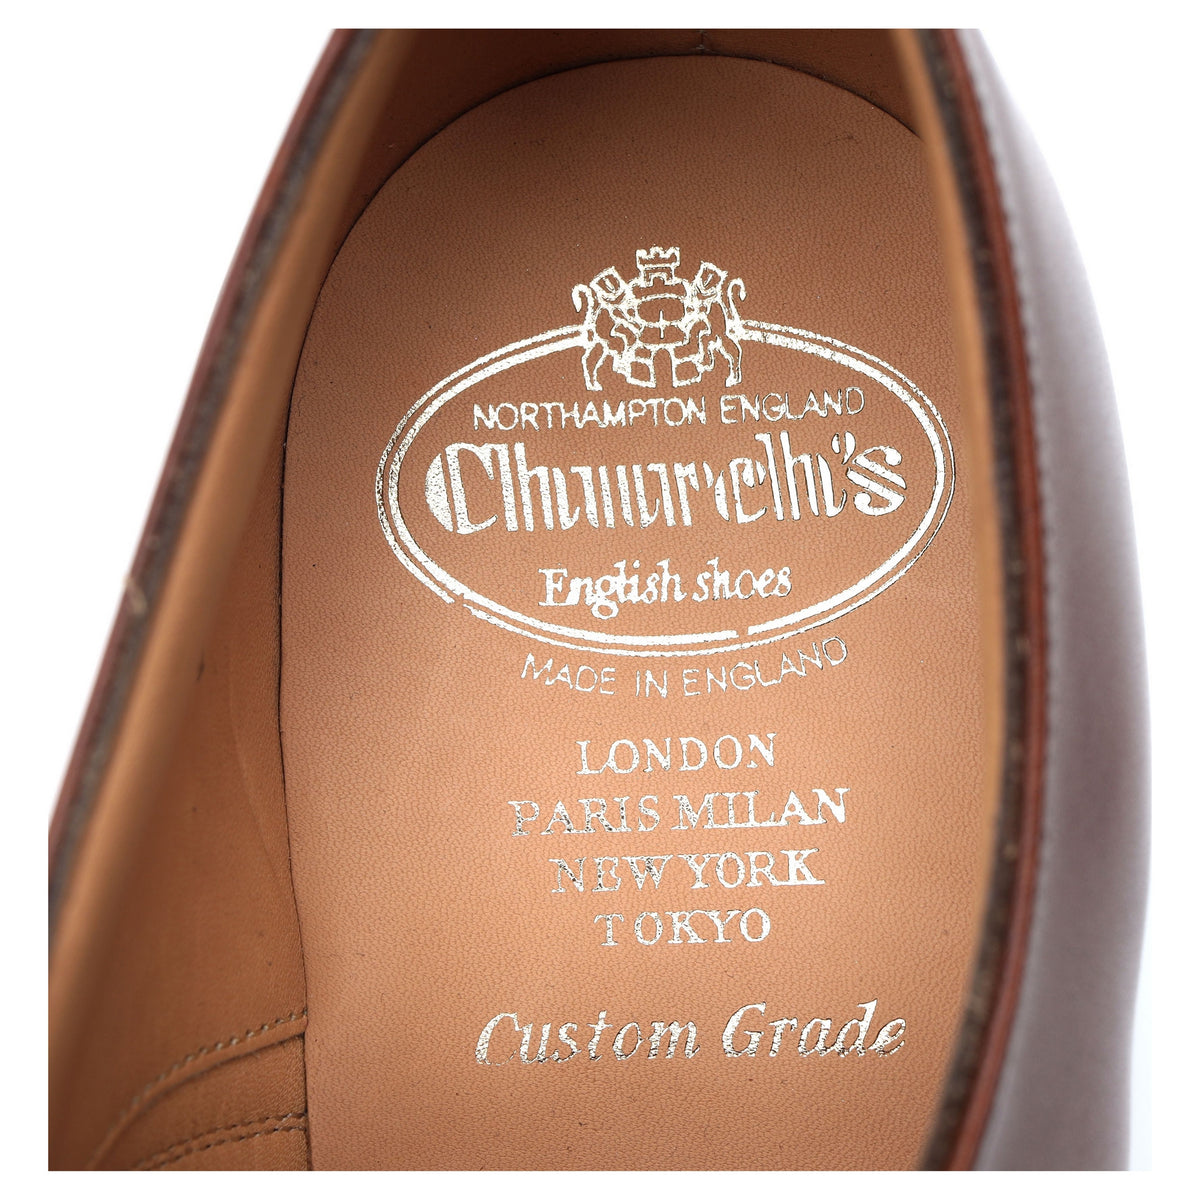 &#39;Dubai&#39; Brown Leather Oxford UK 7 G